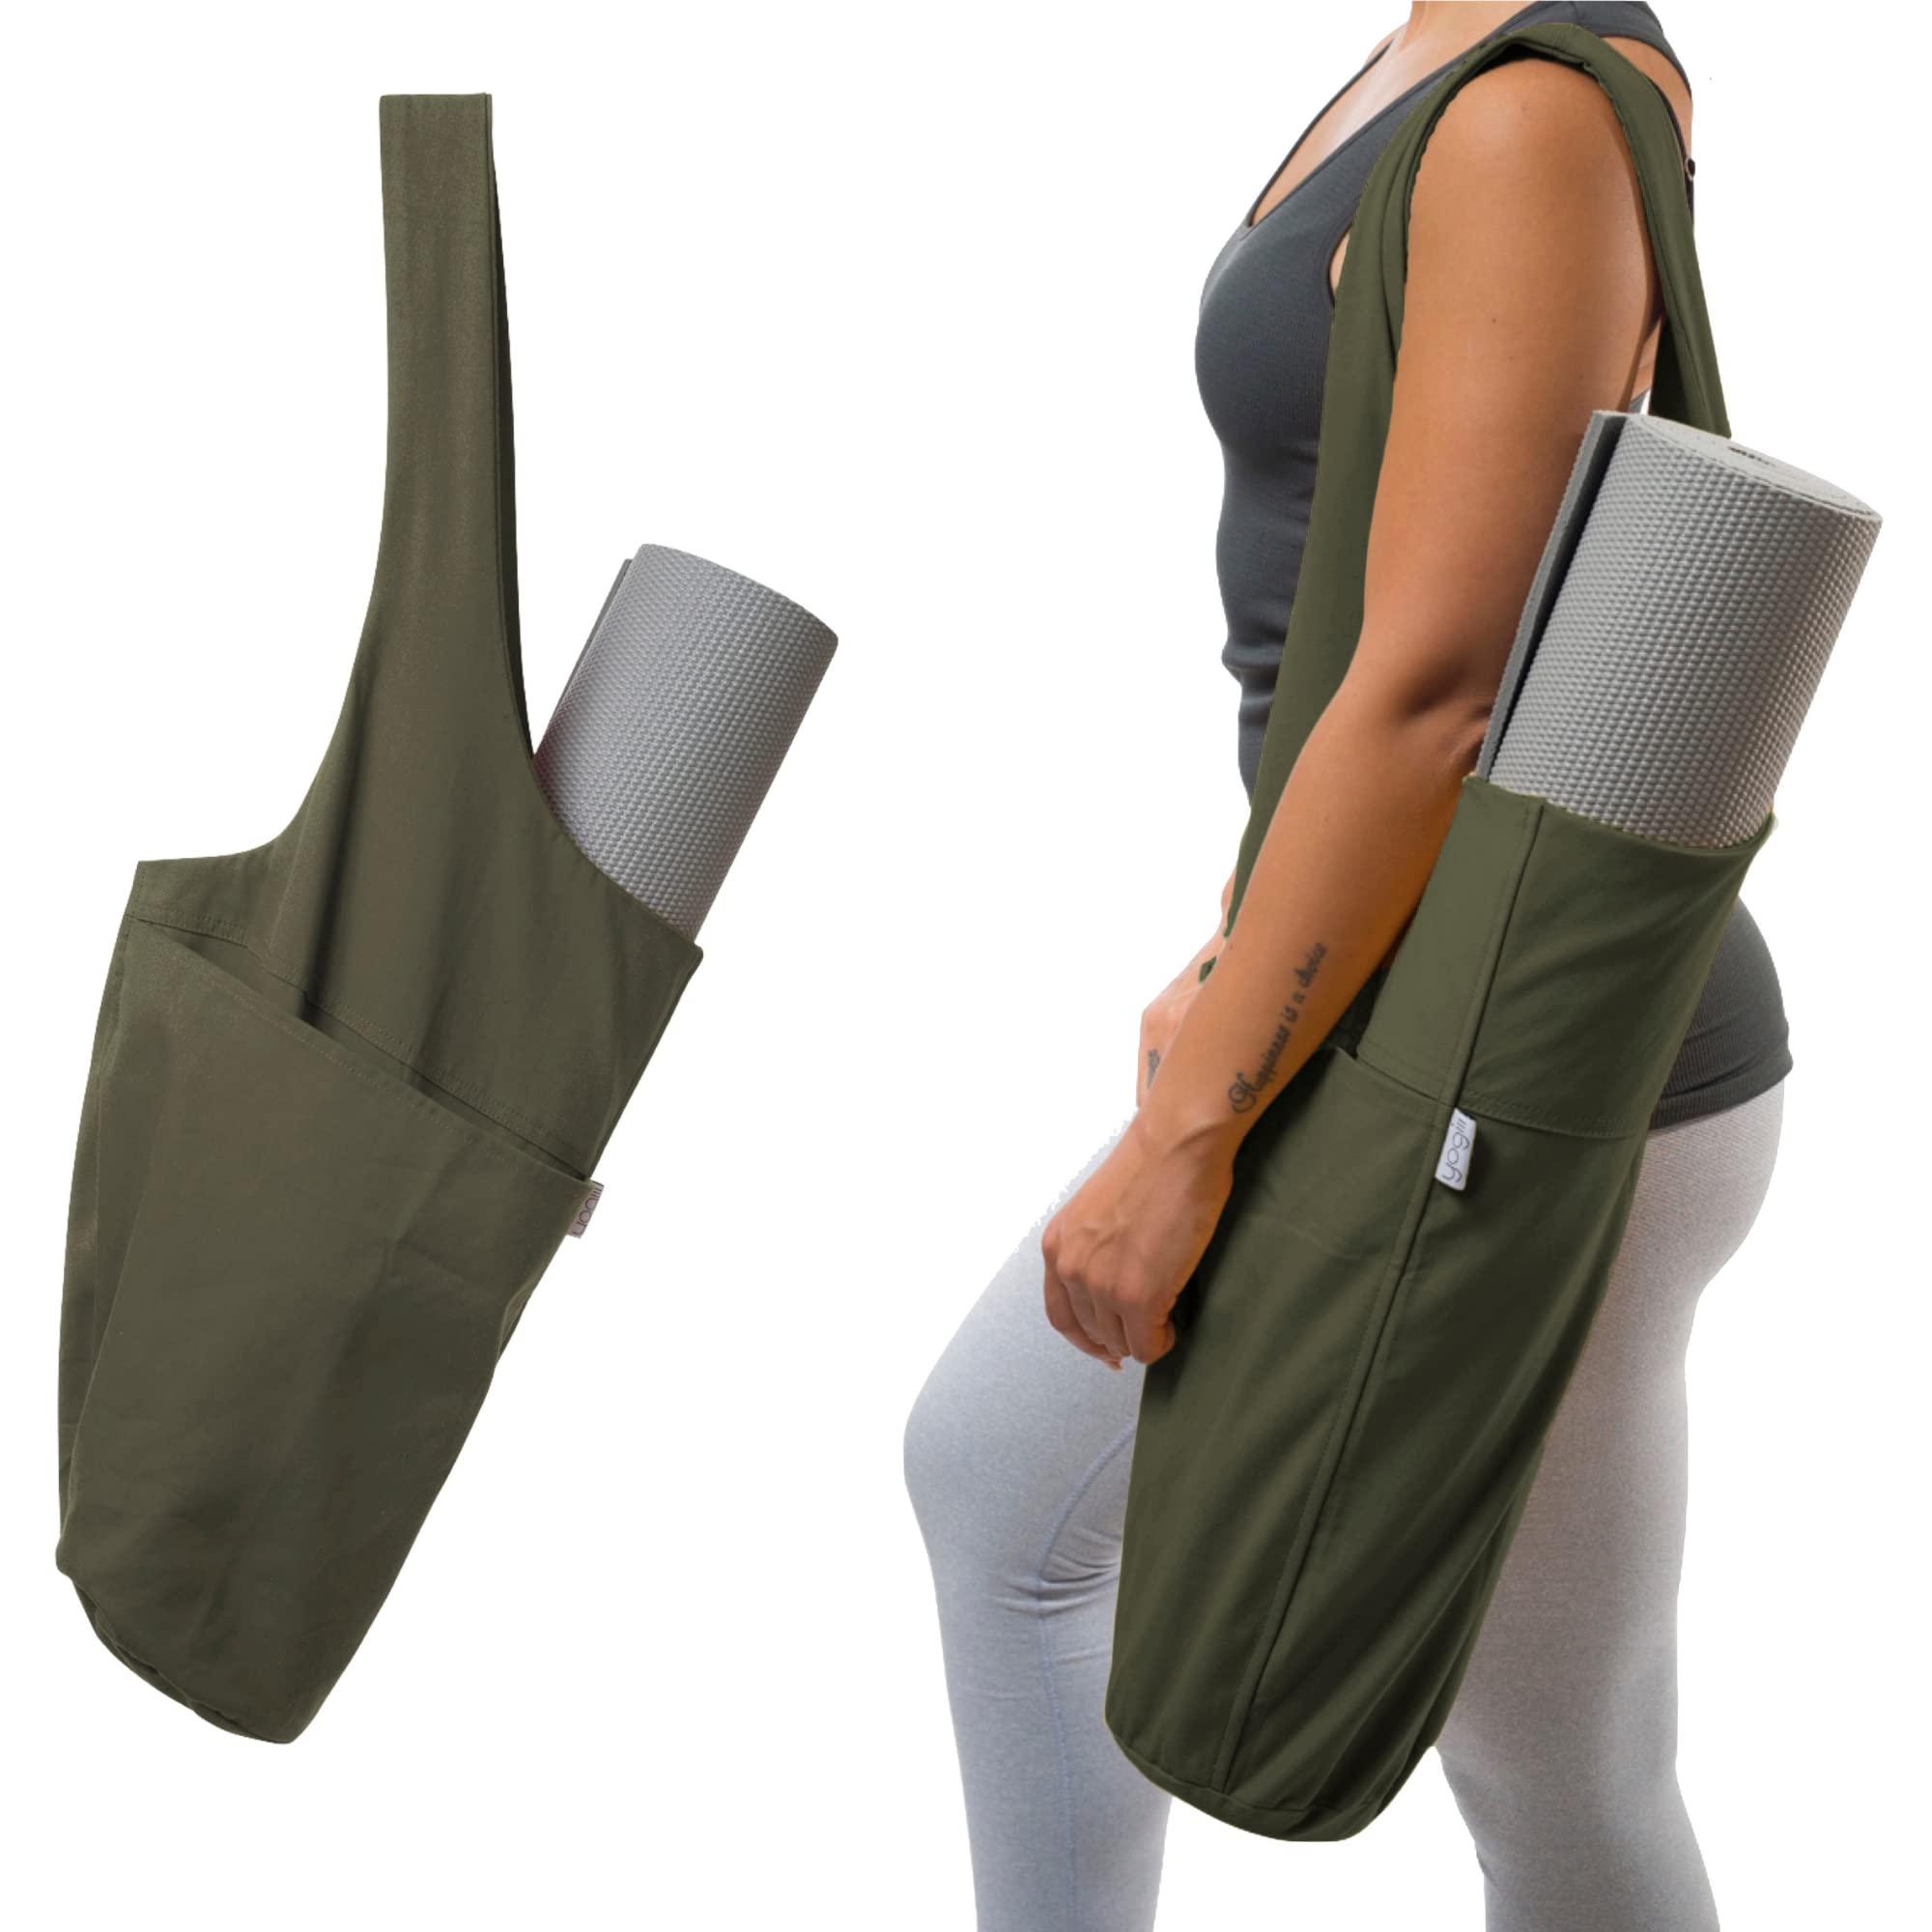 Yogiii Yoga Mat Bag, The ORIGINAL YogiiiTote, Yoga Mat Carrier Tote Sling  w/Large Side Pocket & Zipper Pocket